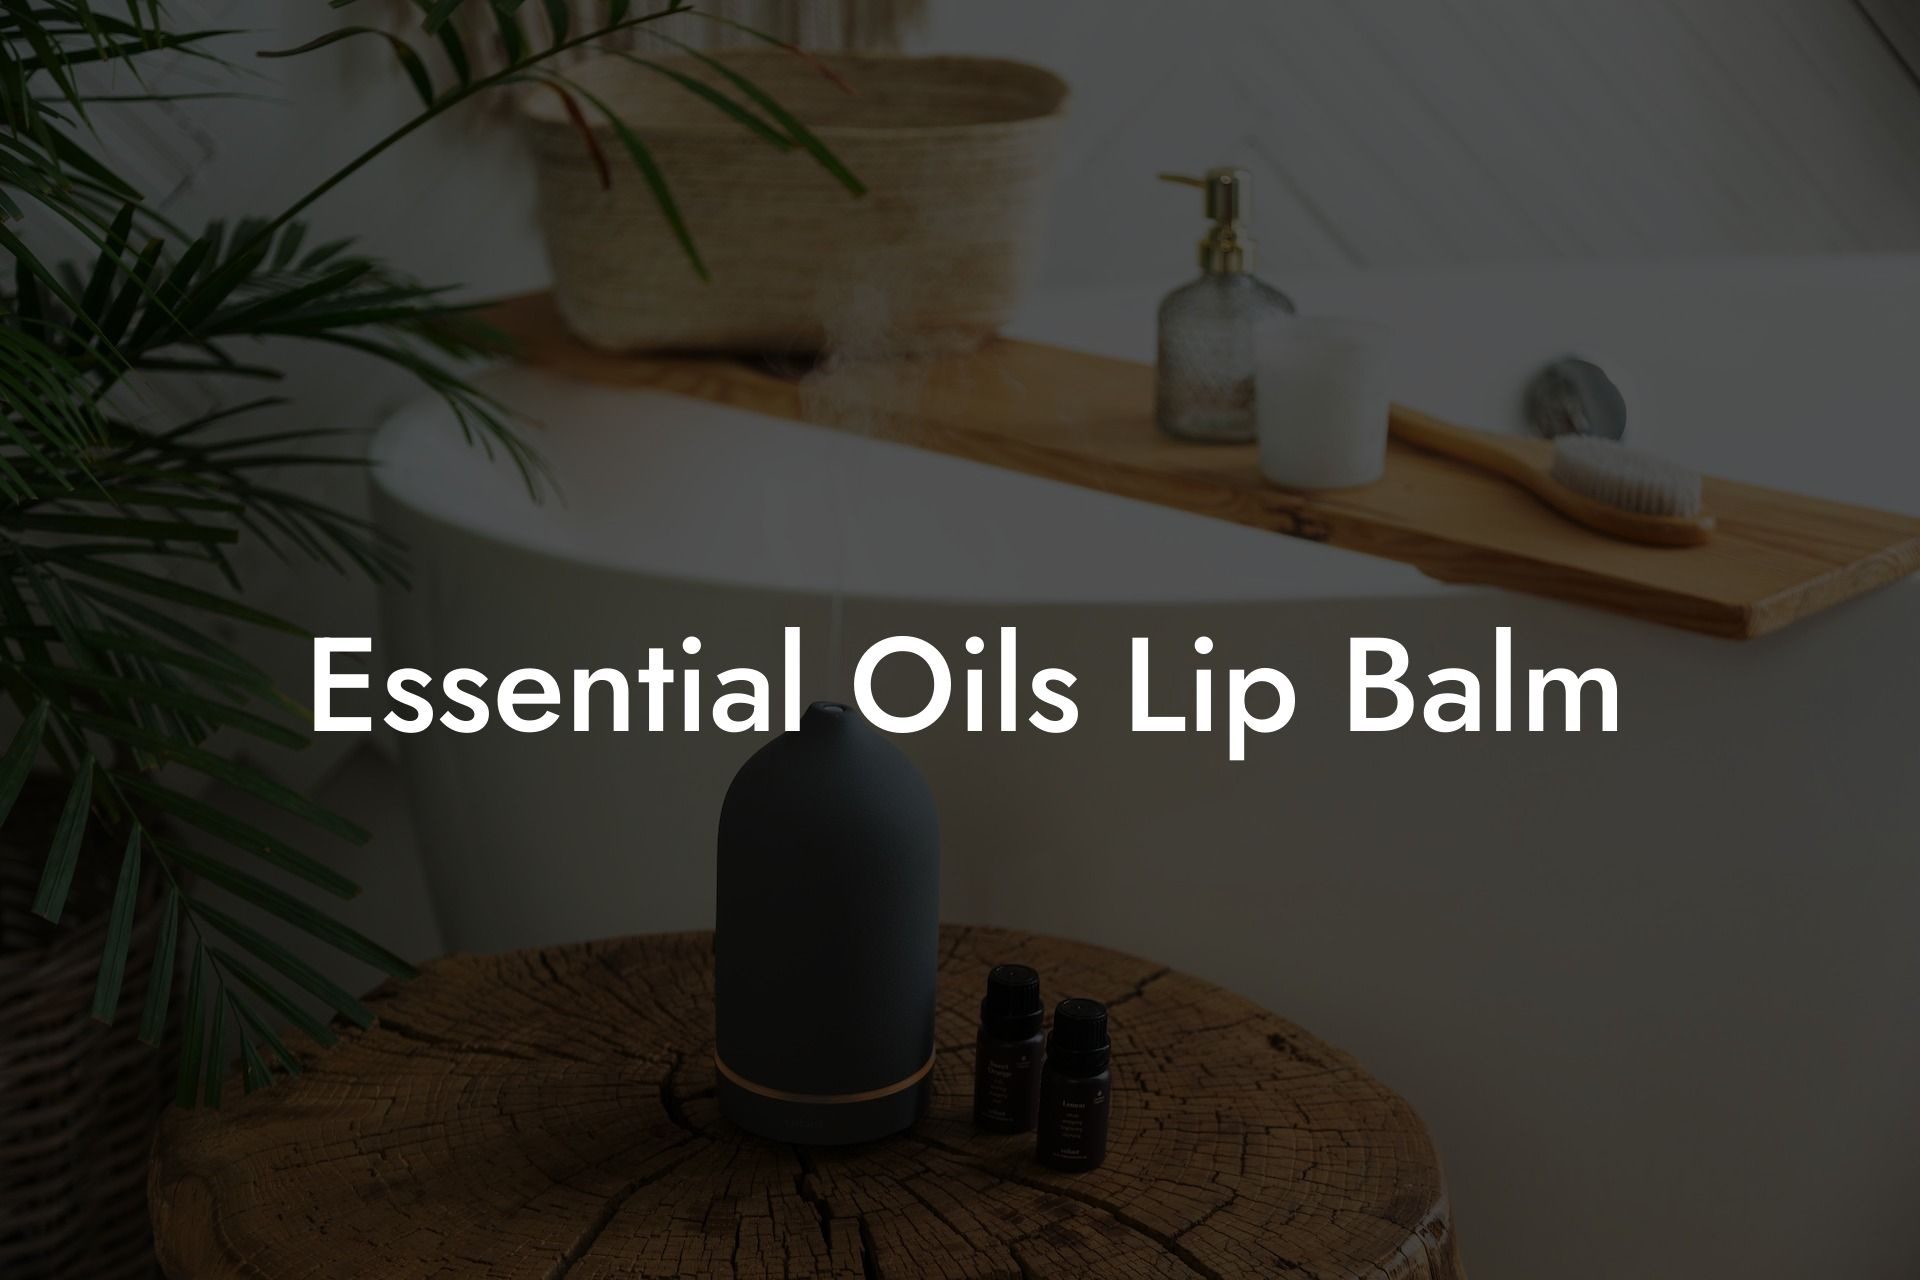 Essential Oils Lip Balm